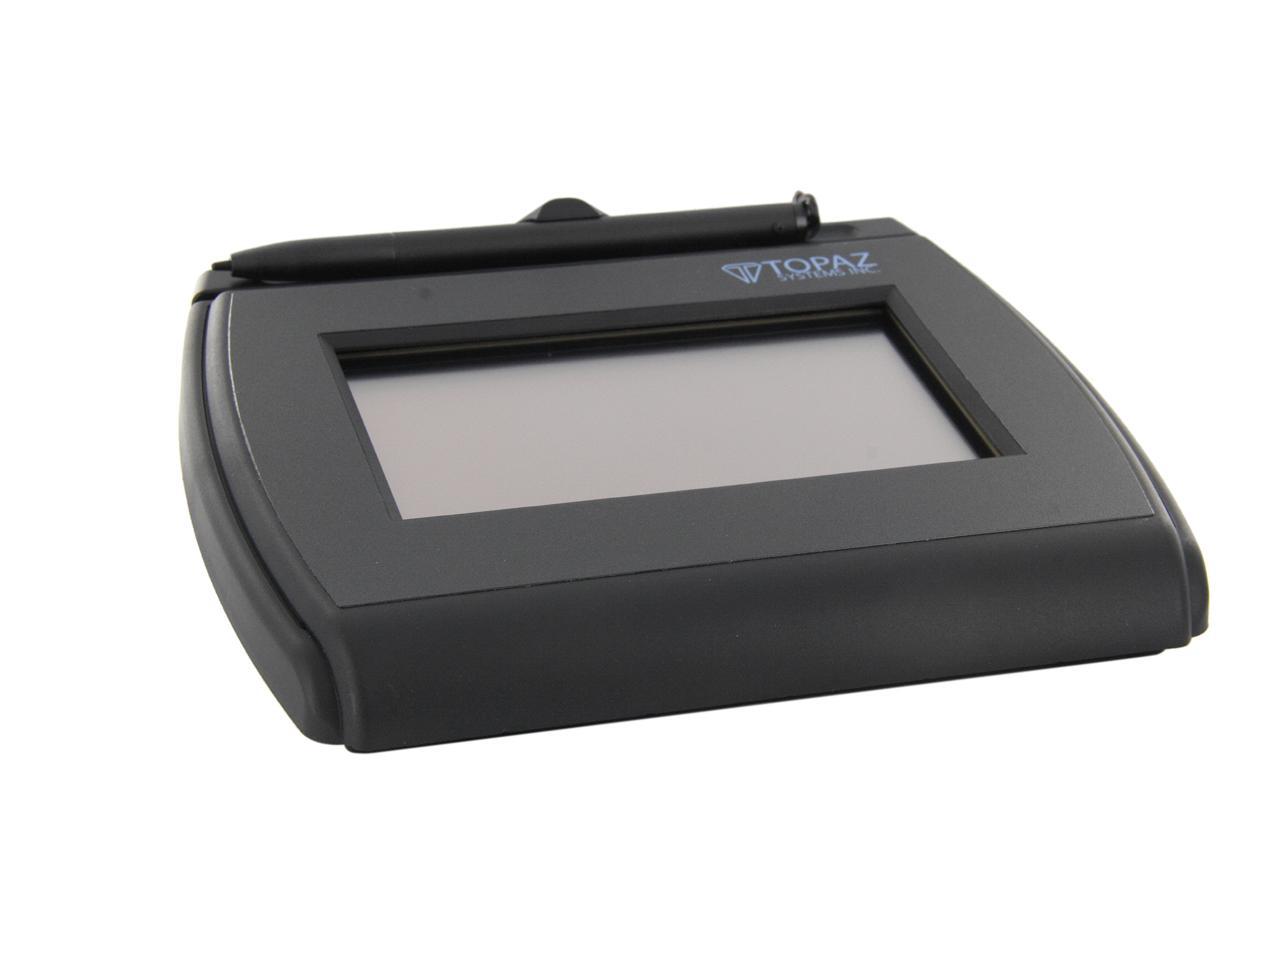 Topaz SigLite T-lbk750-bhsb-r LCD 4x3 Signature Capture Reader Pad for sale online 